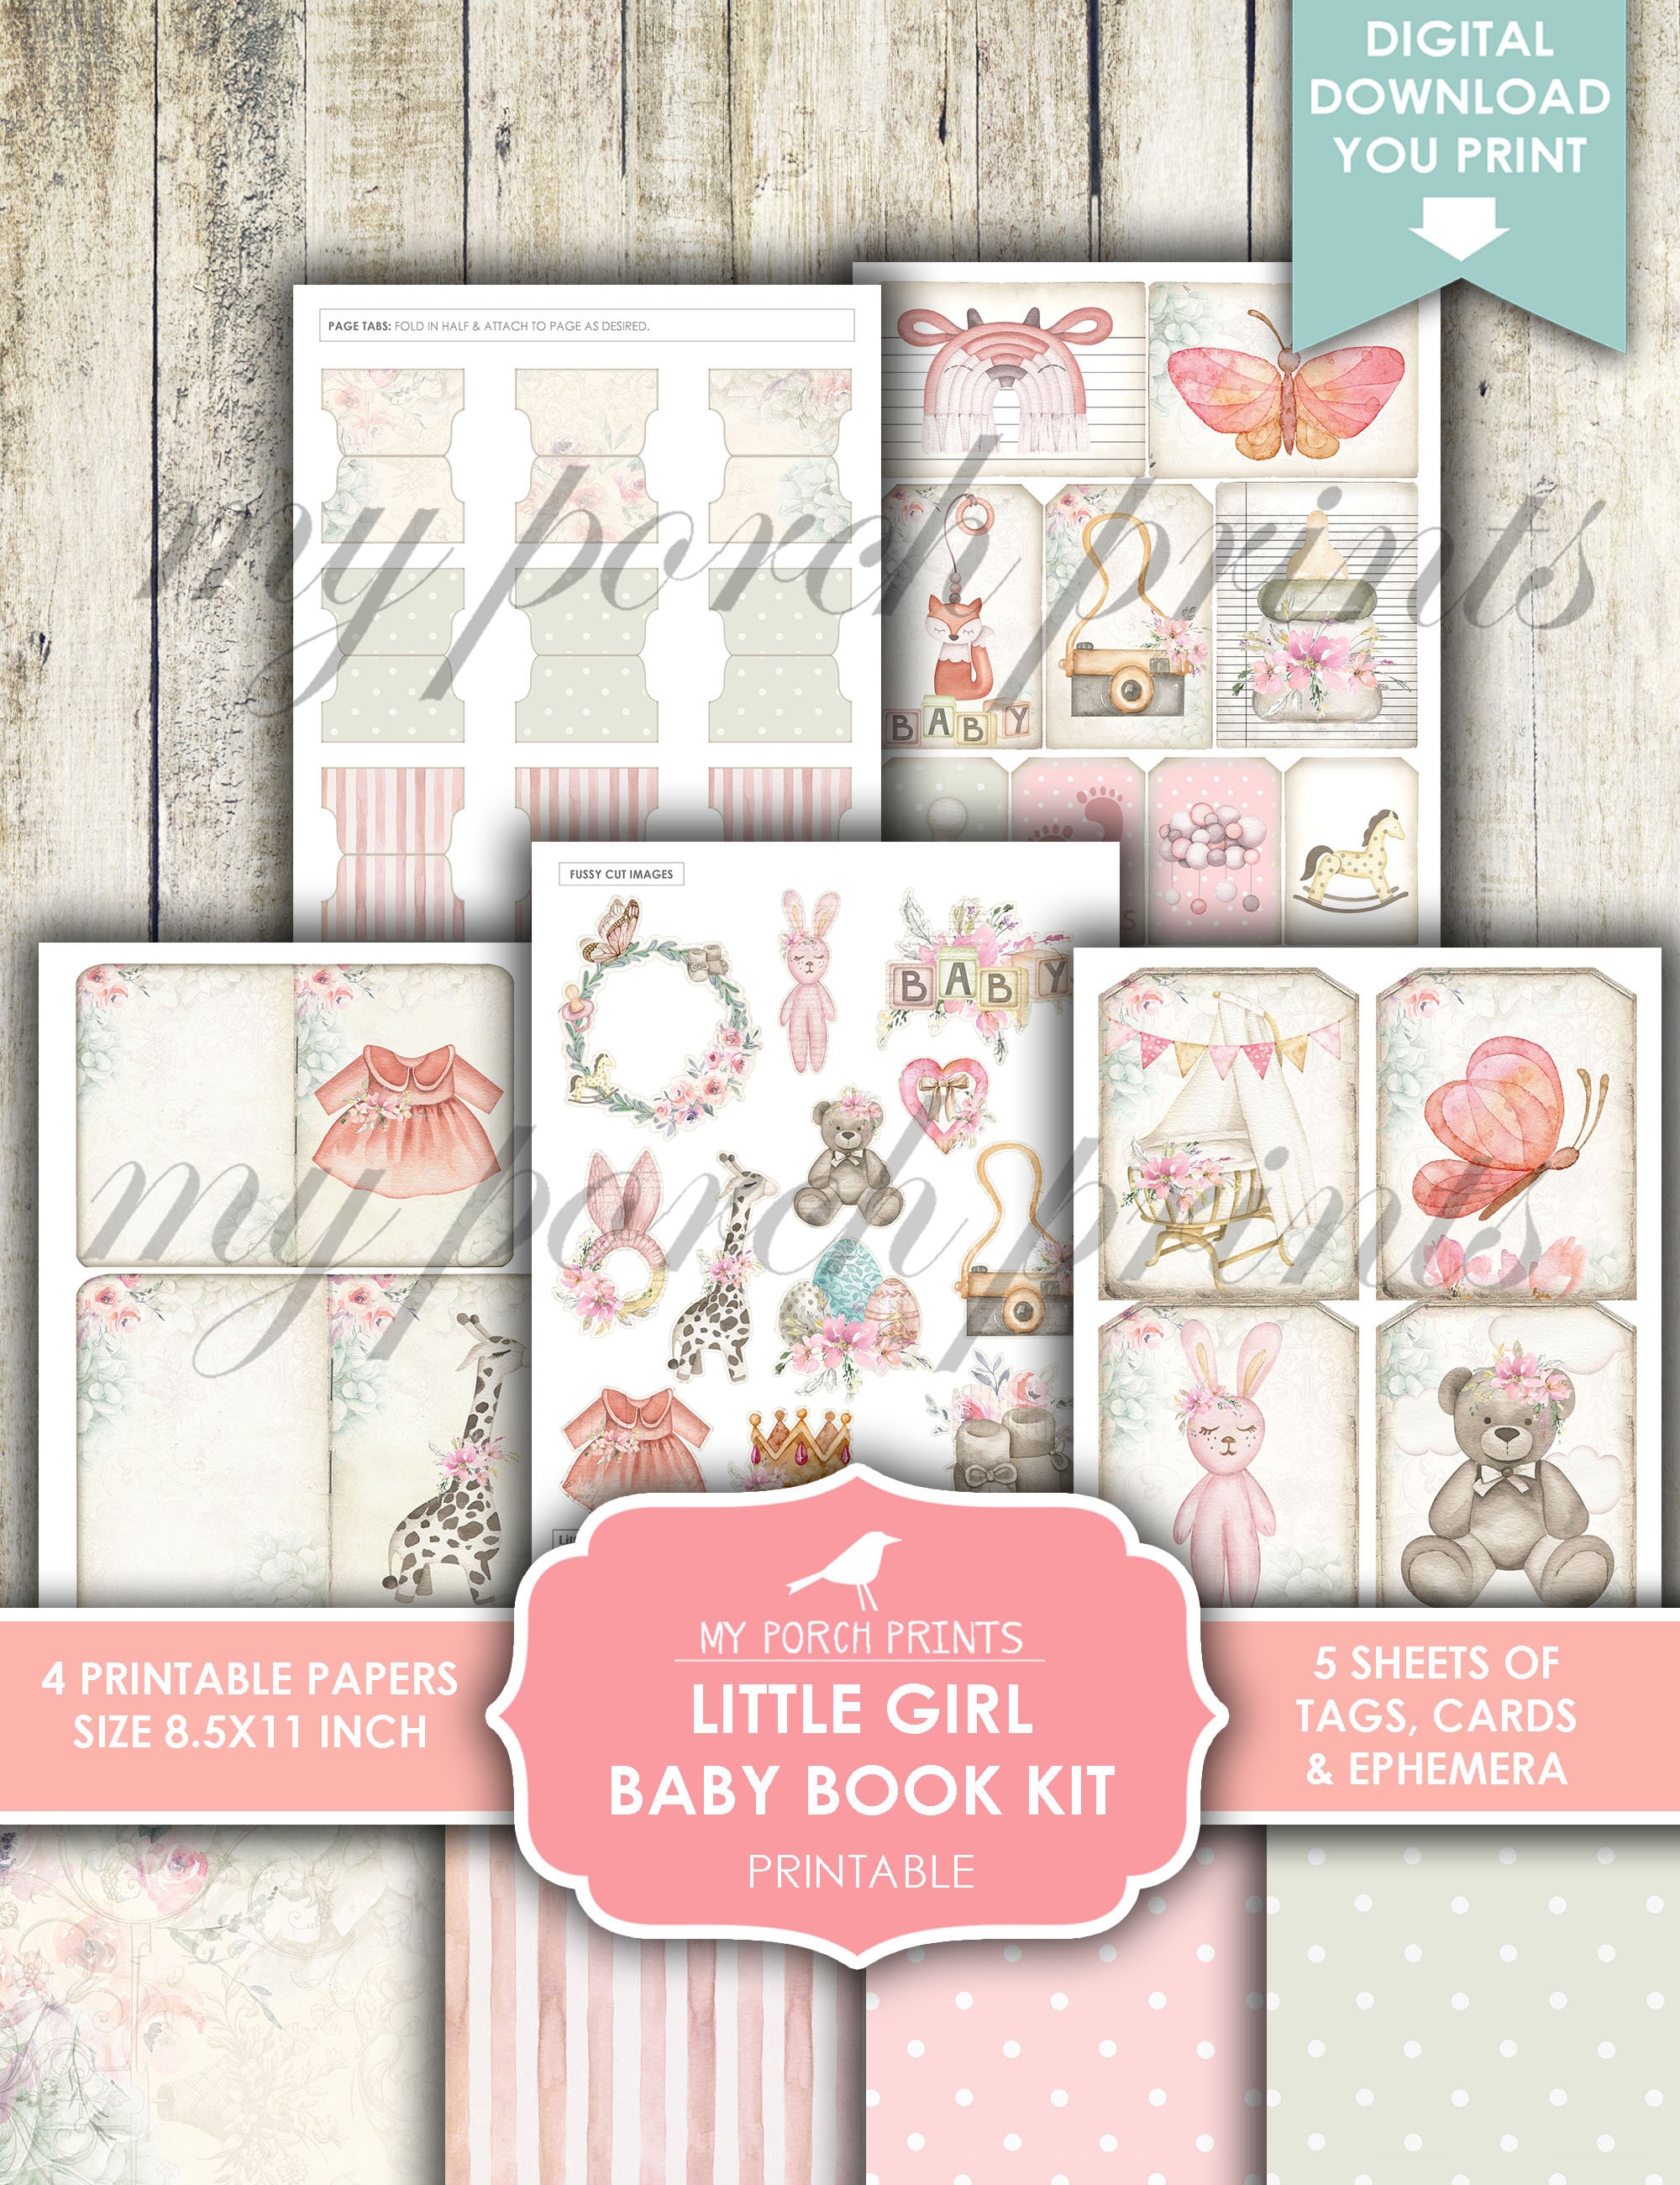 A New Creation - Spring Junk Journal Kit - Make a Mini Matchbook Journ –  Pink Paper Peppermints